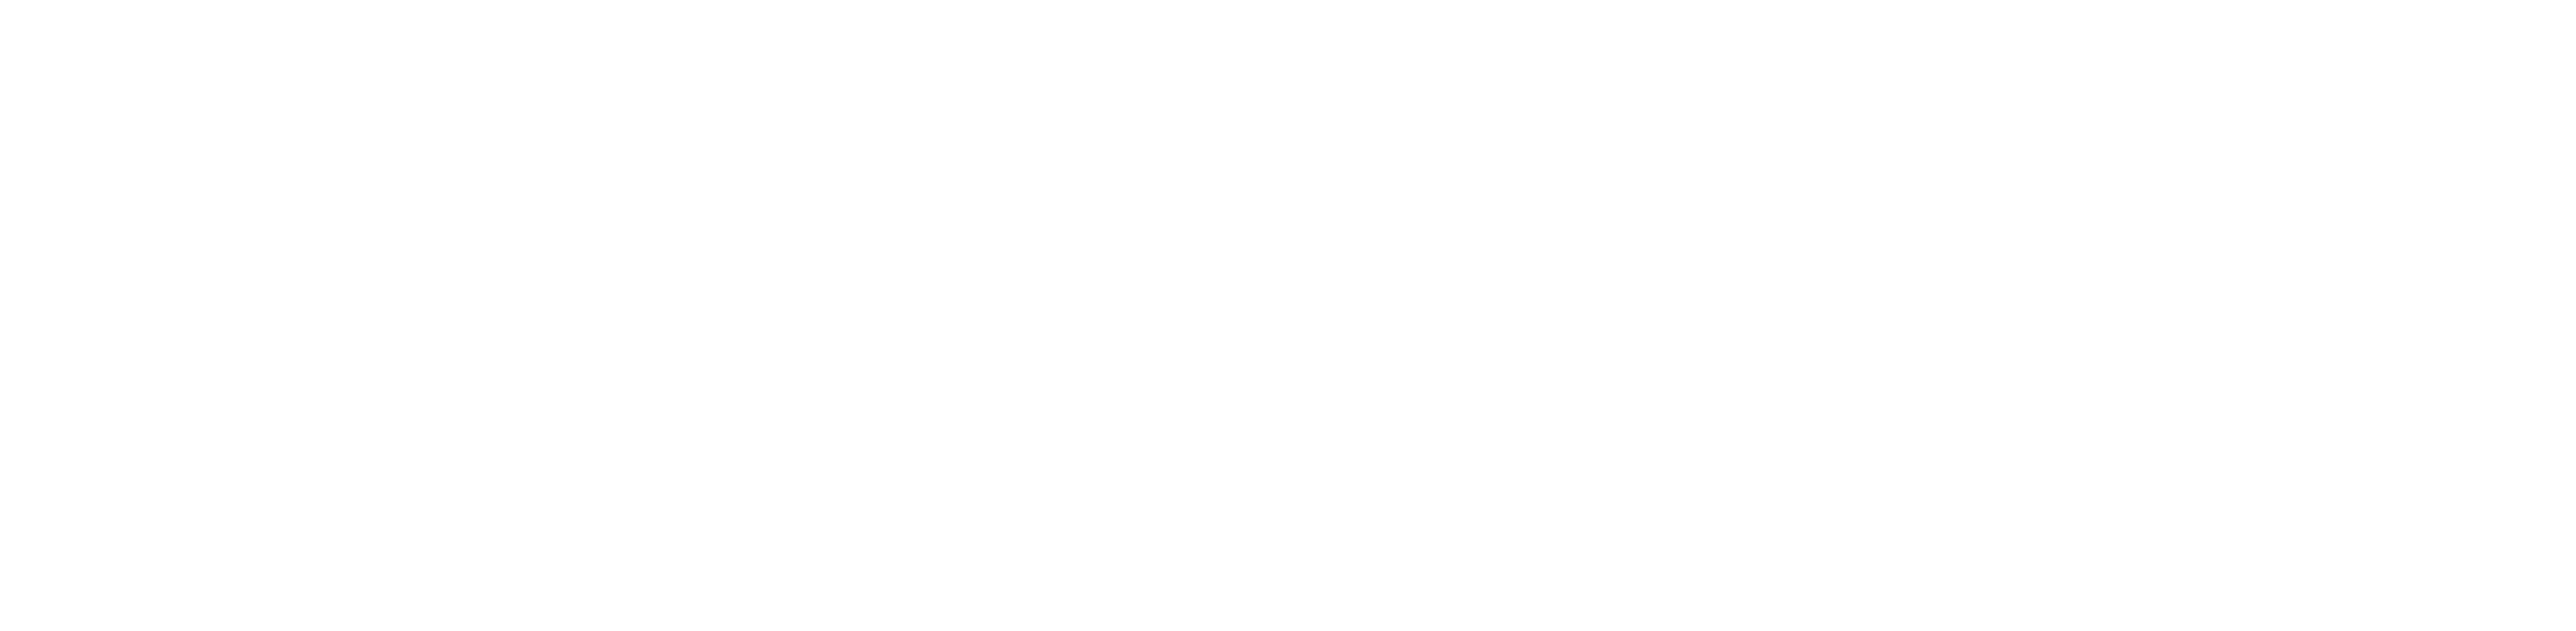 Murdoch Mysteries logo